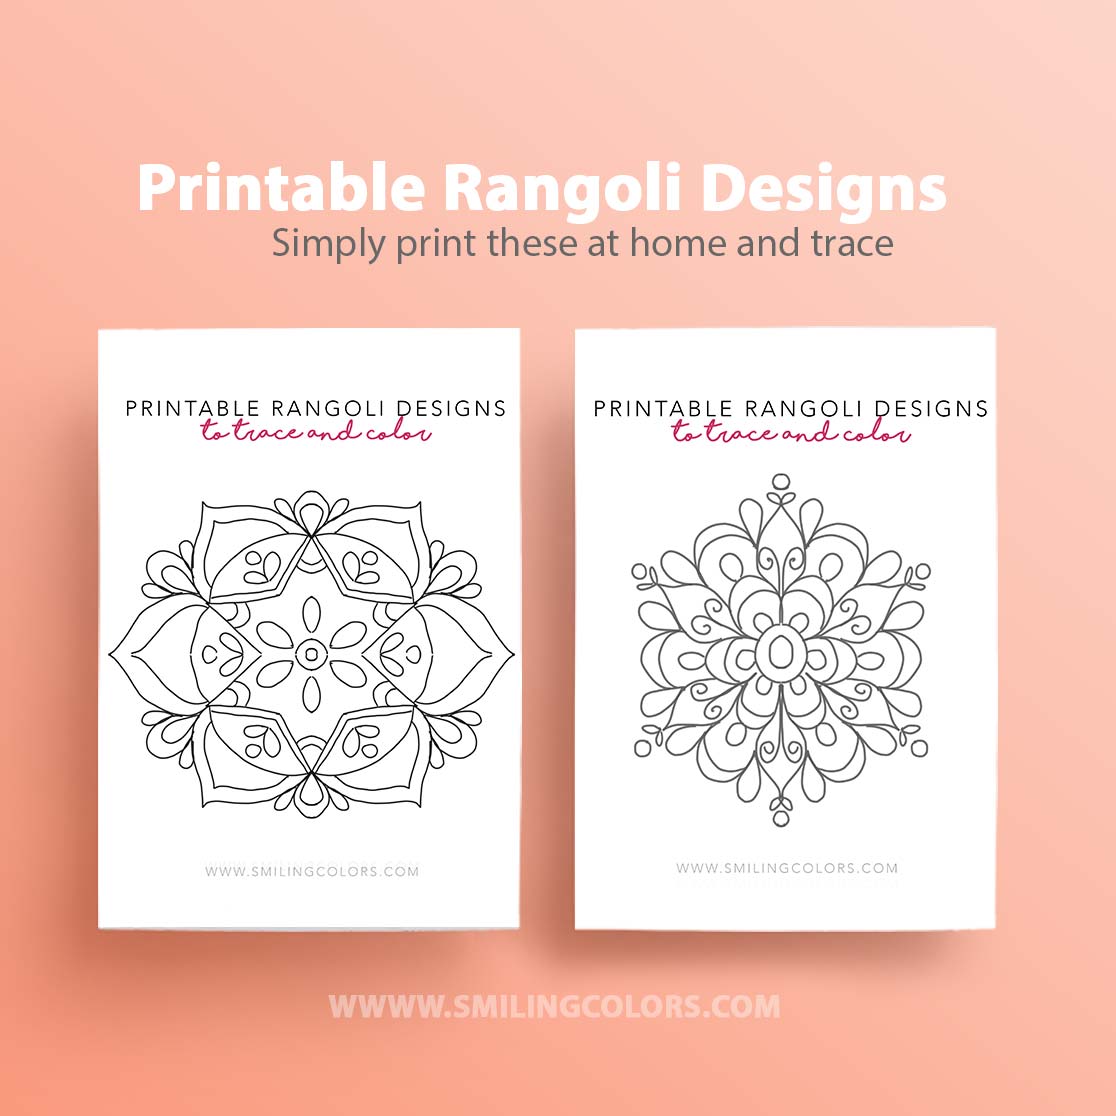 Free printable rangoli designs that you can color